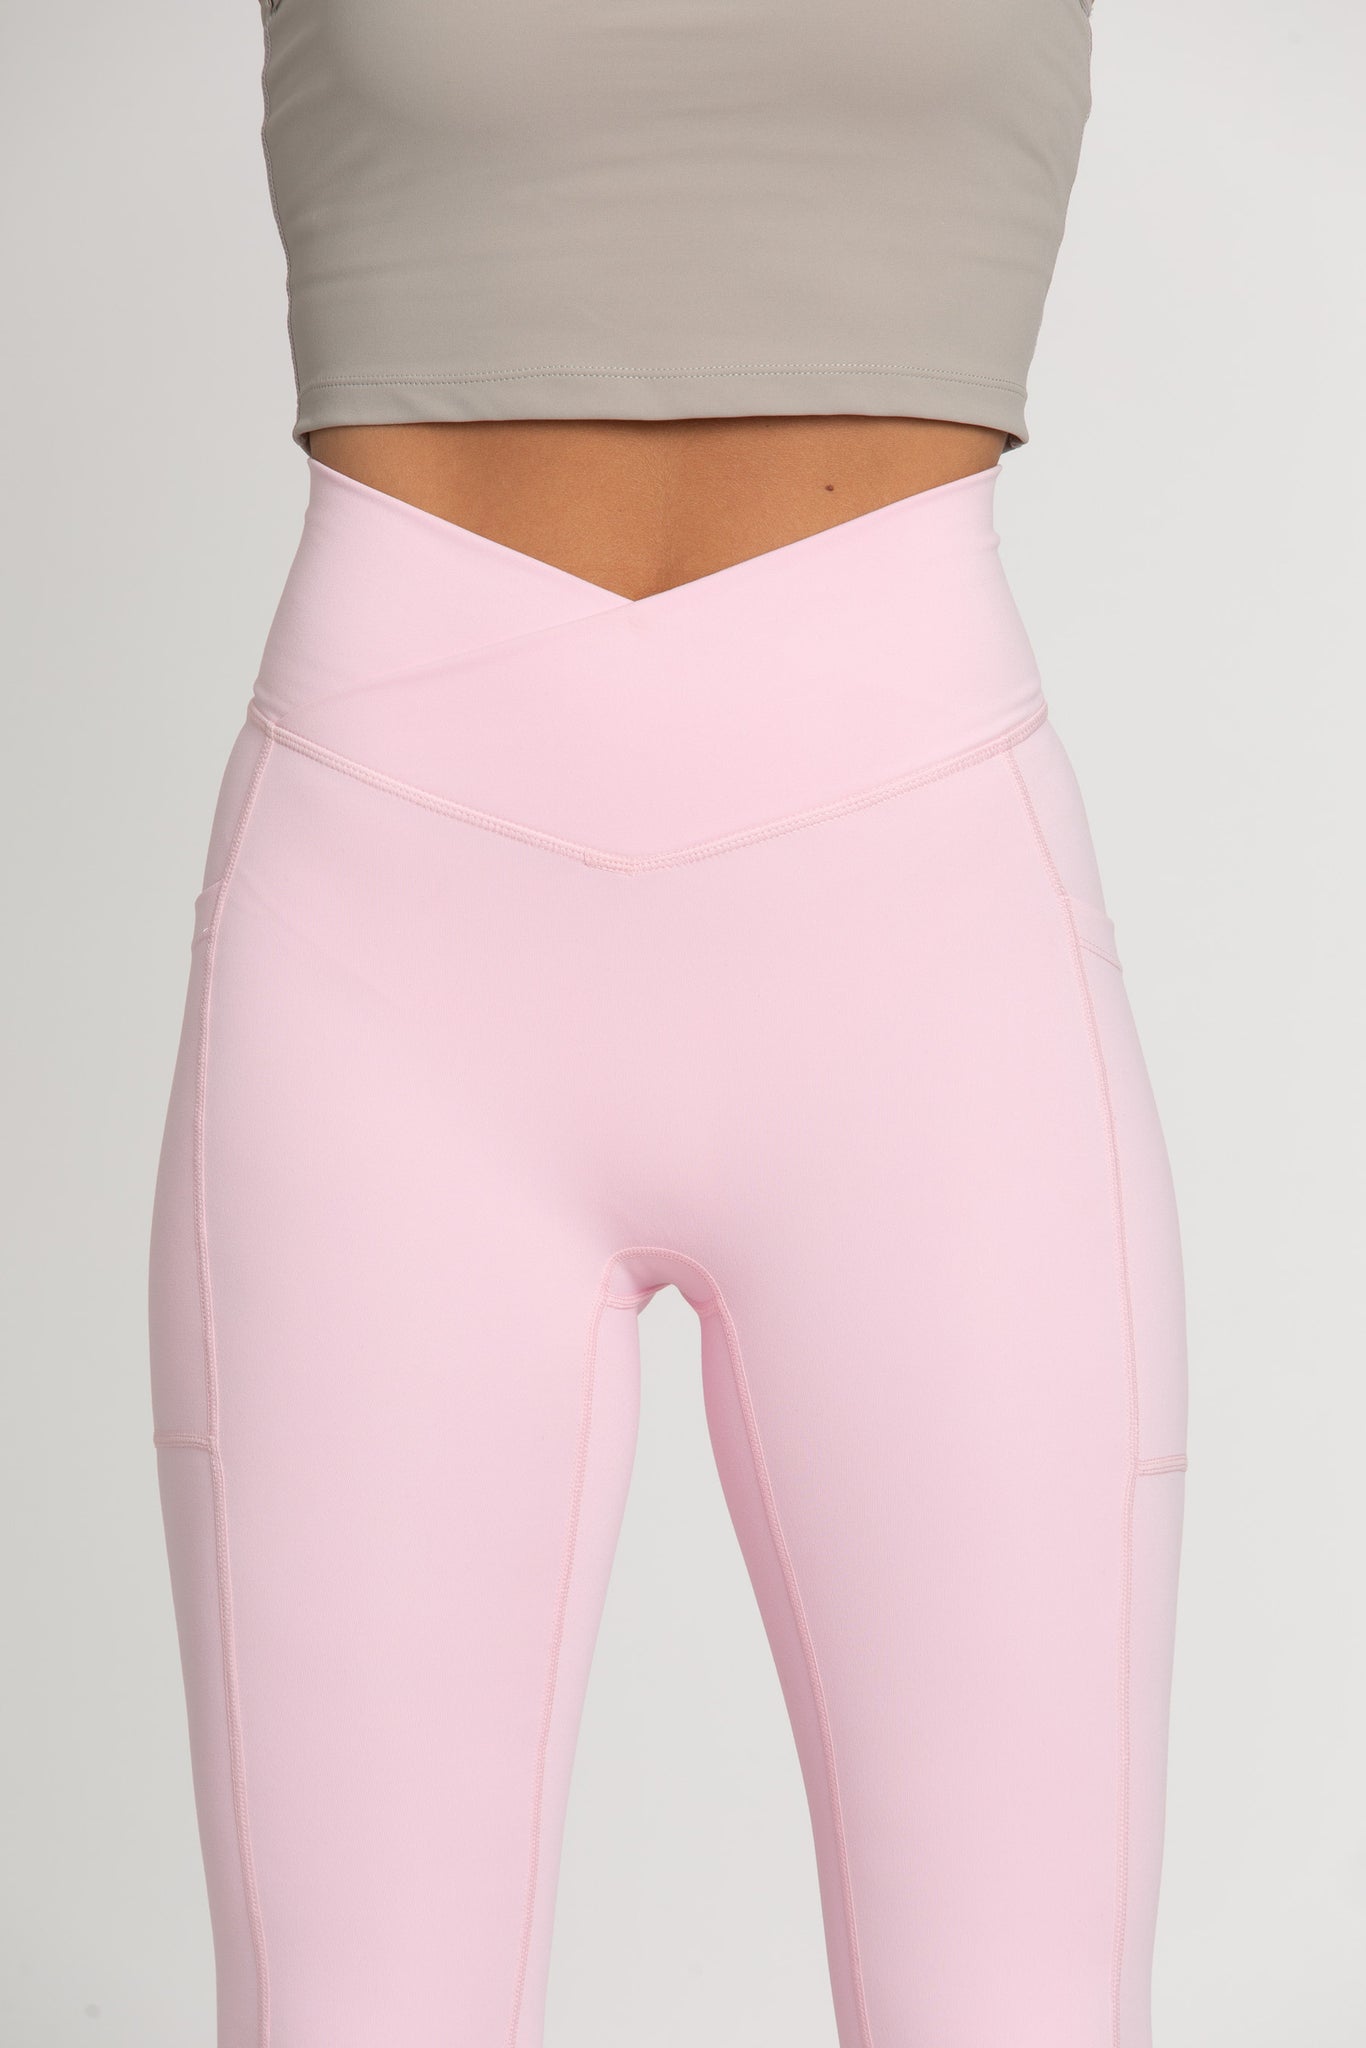 Let's Gym USA Brazilian Fashion Fitness Leggings Seamless Pink